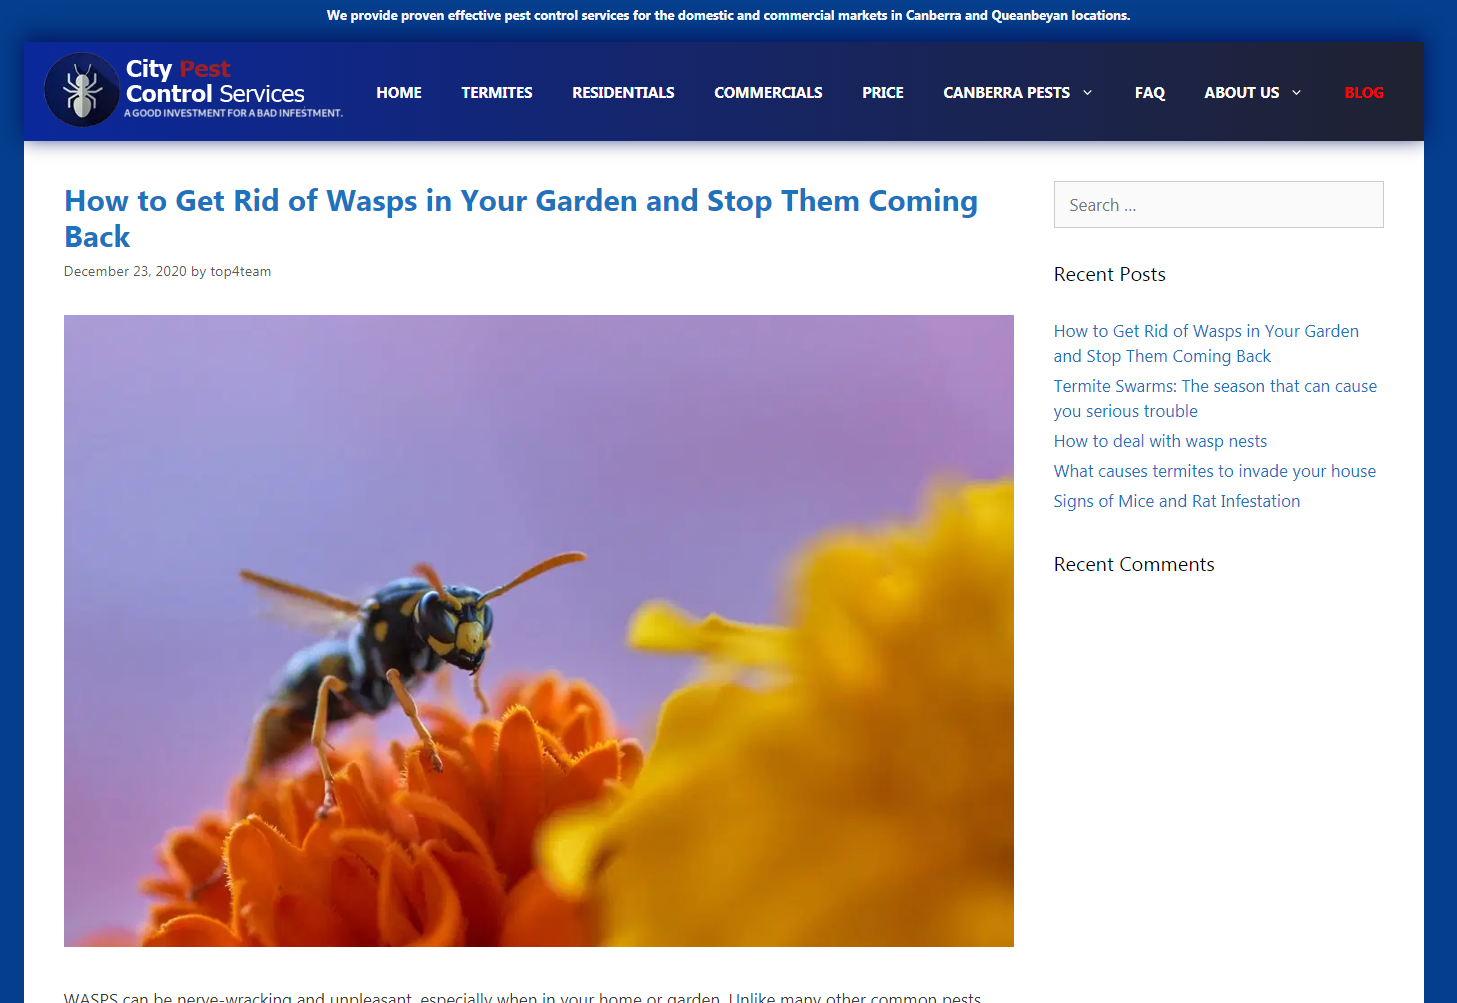 City Pest Control Blog - Top4 Marketing